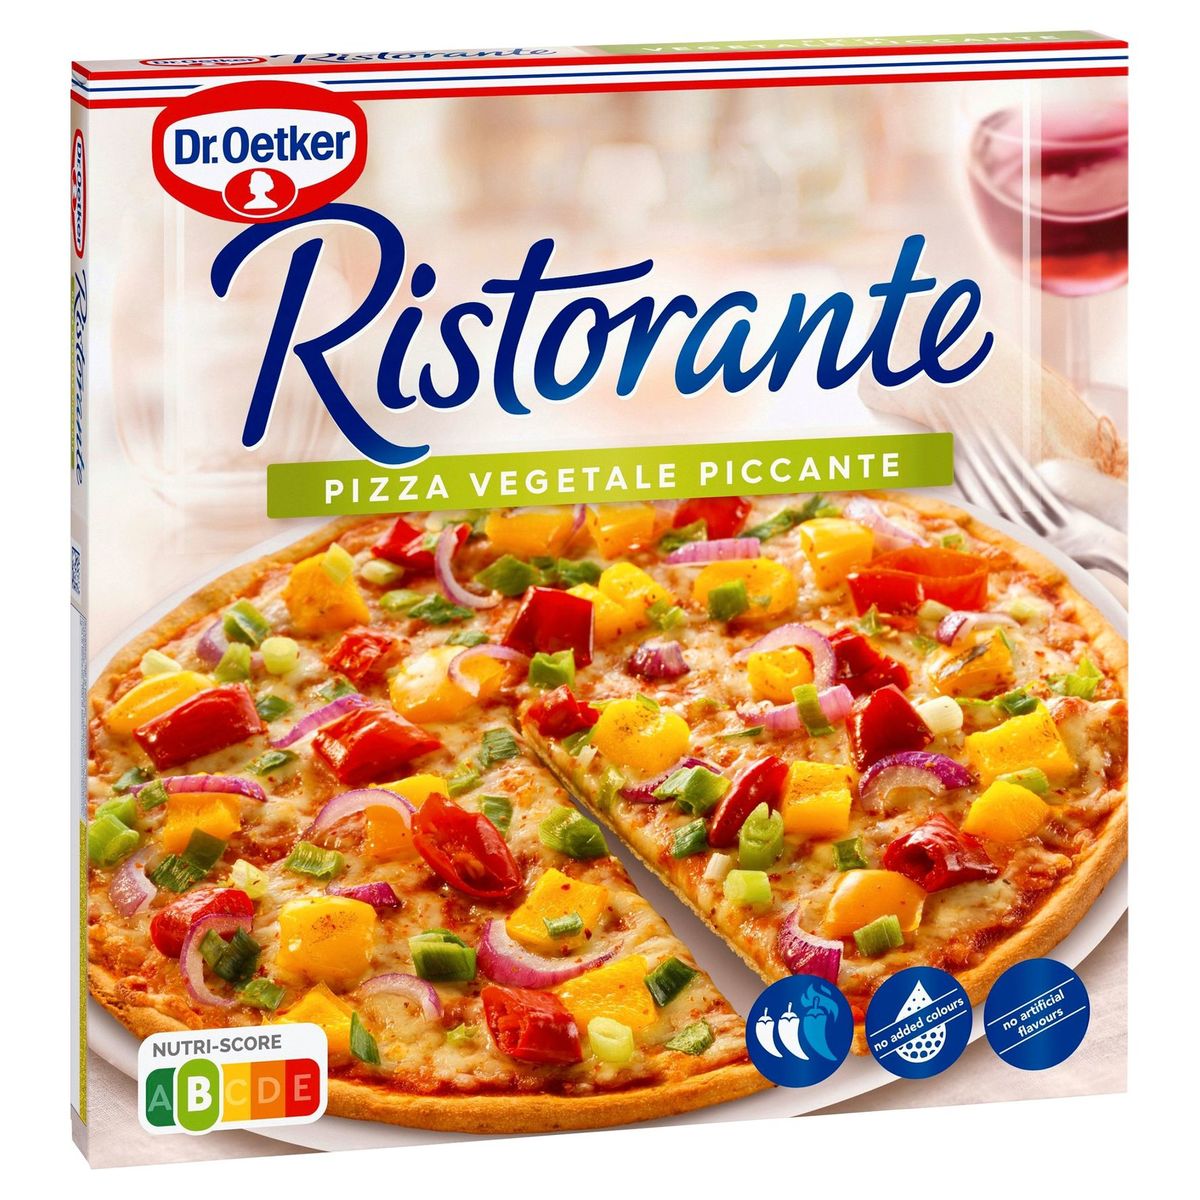 Dr. Oetker Pizza Ristorante Vegetale Piccante 350 g